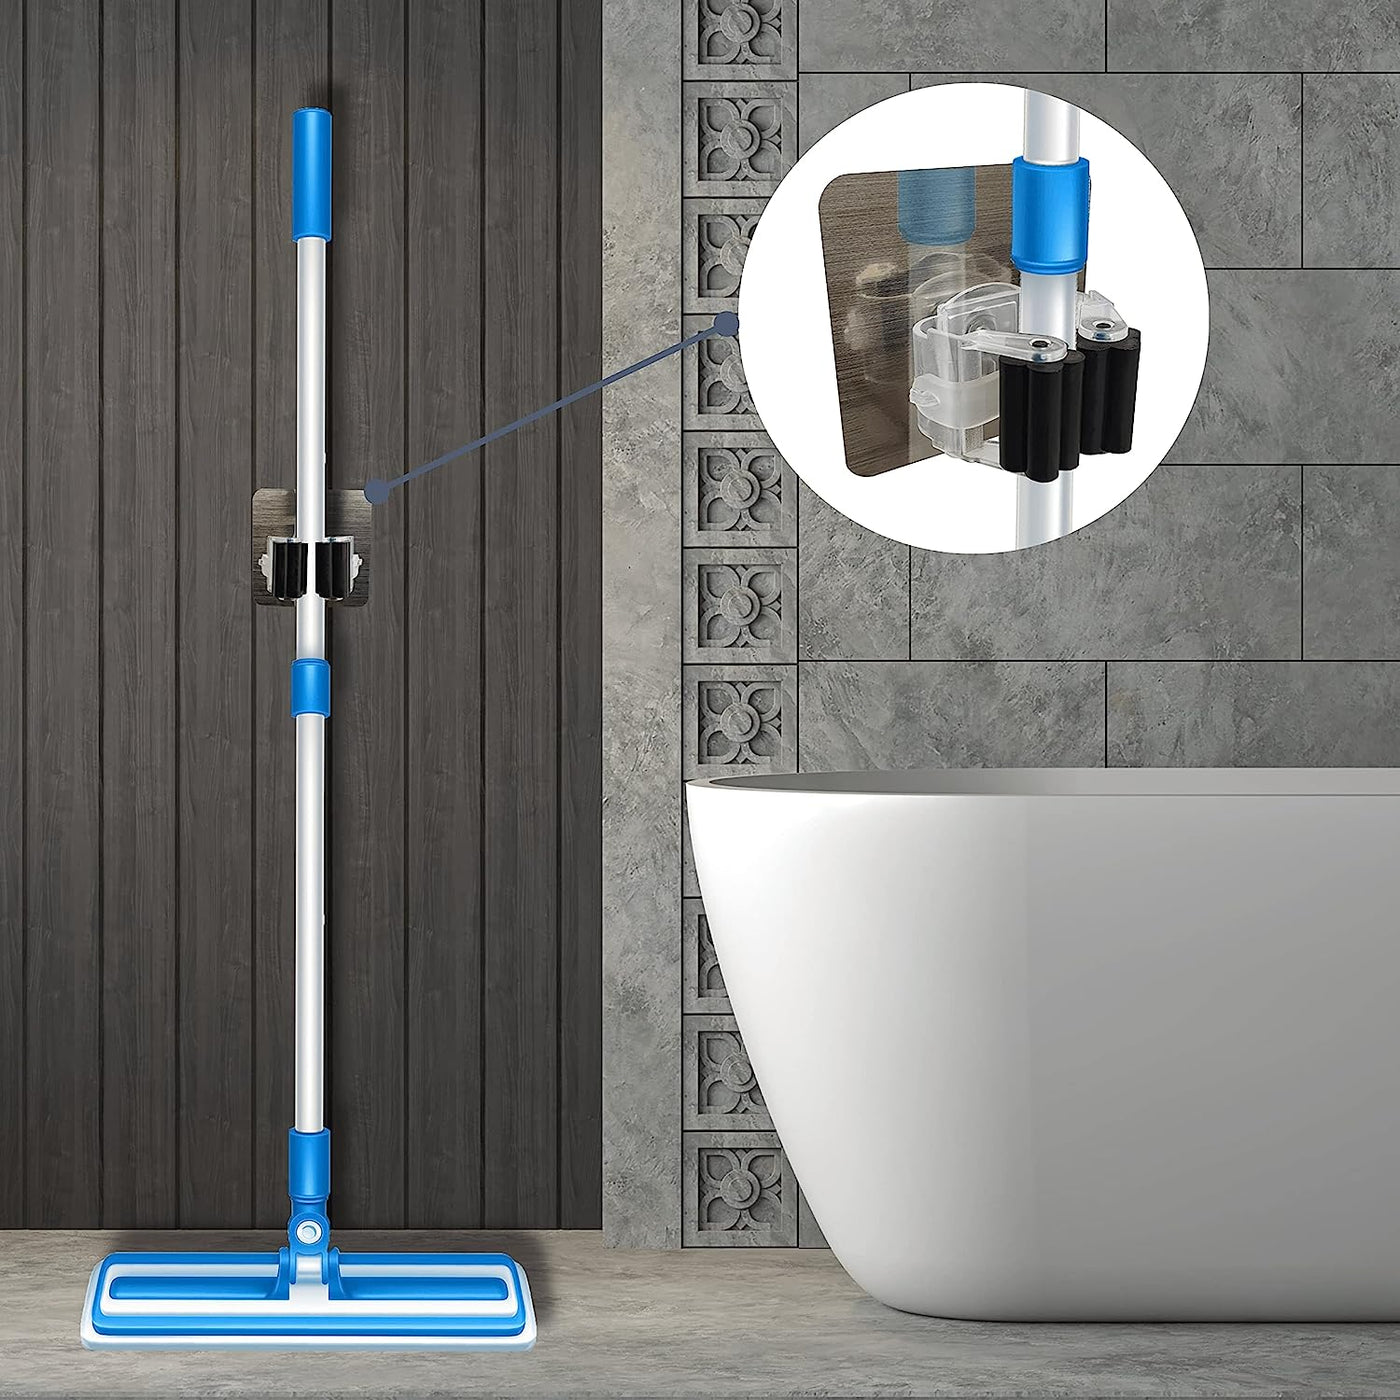 Dubkart Bathroom accessories 4 PCS Self Adhesive Broom Mop Holder